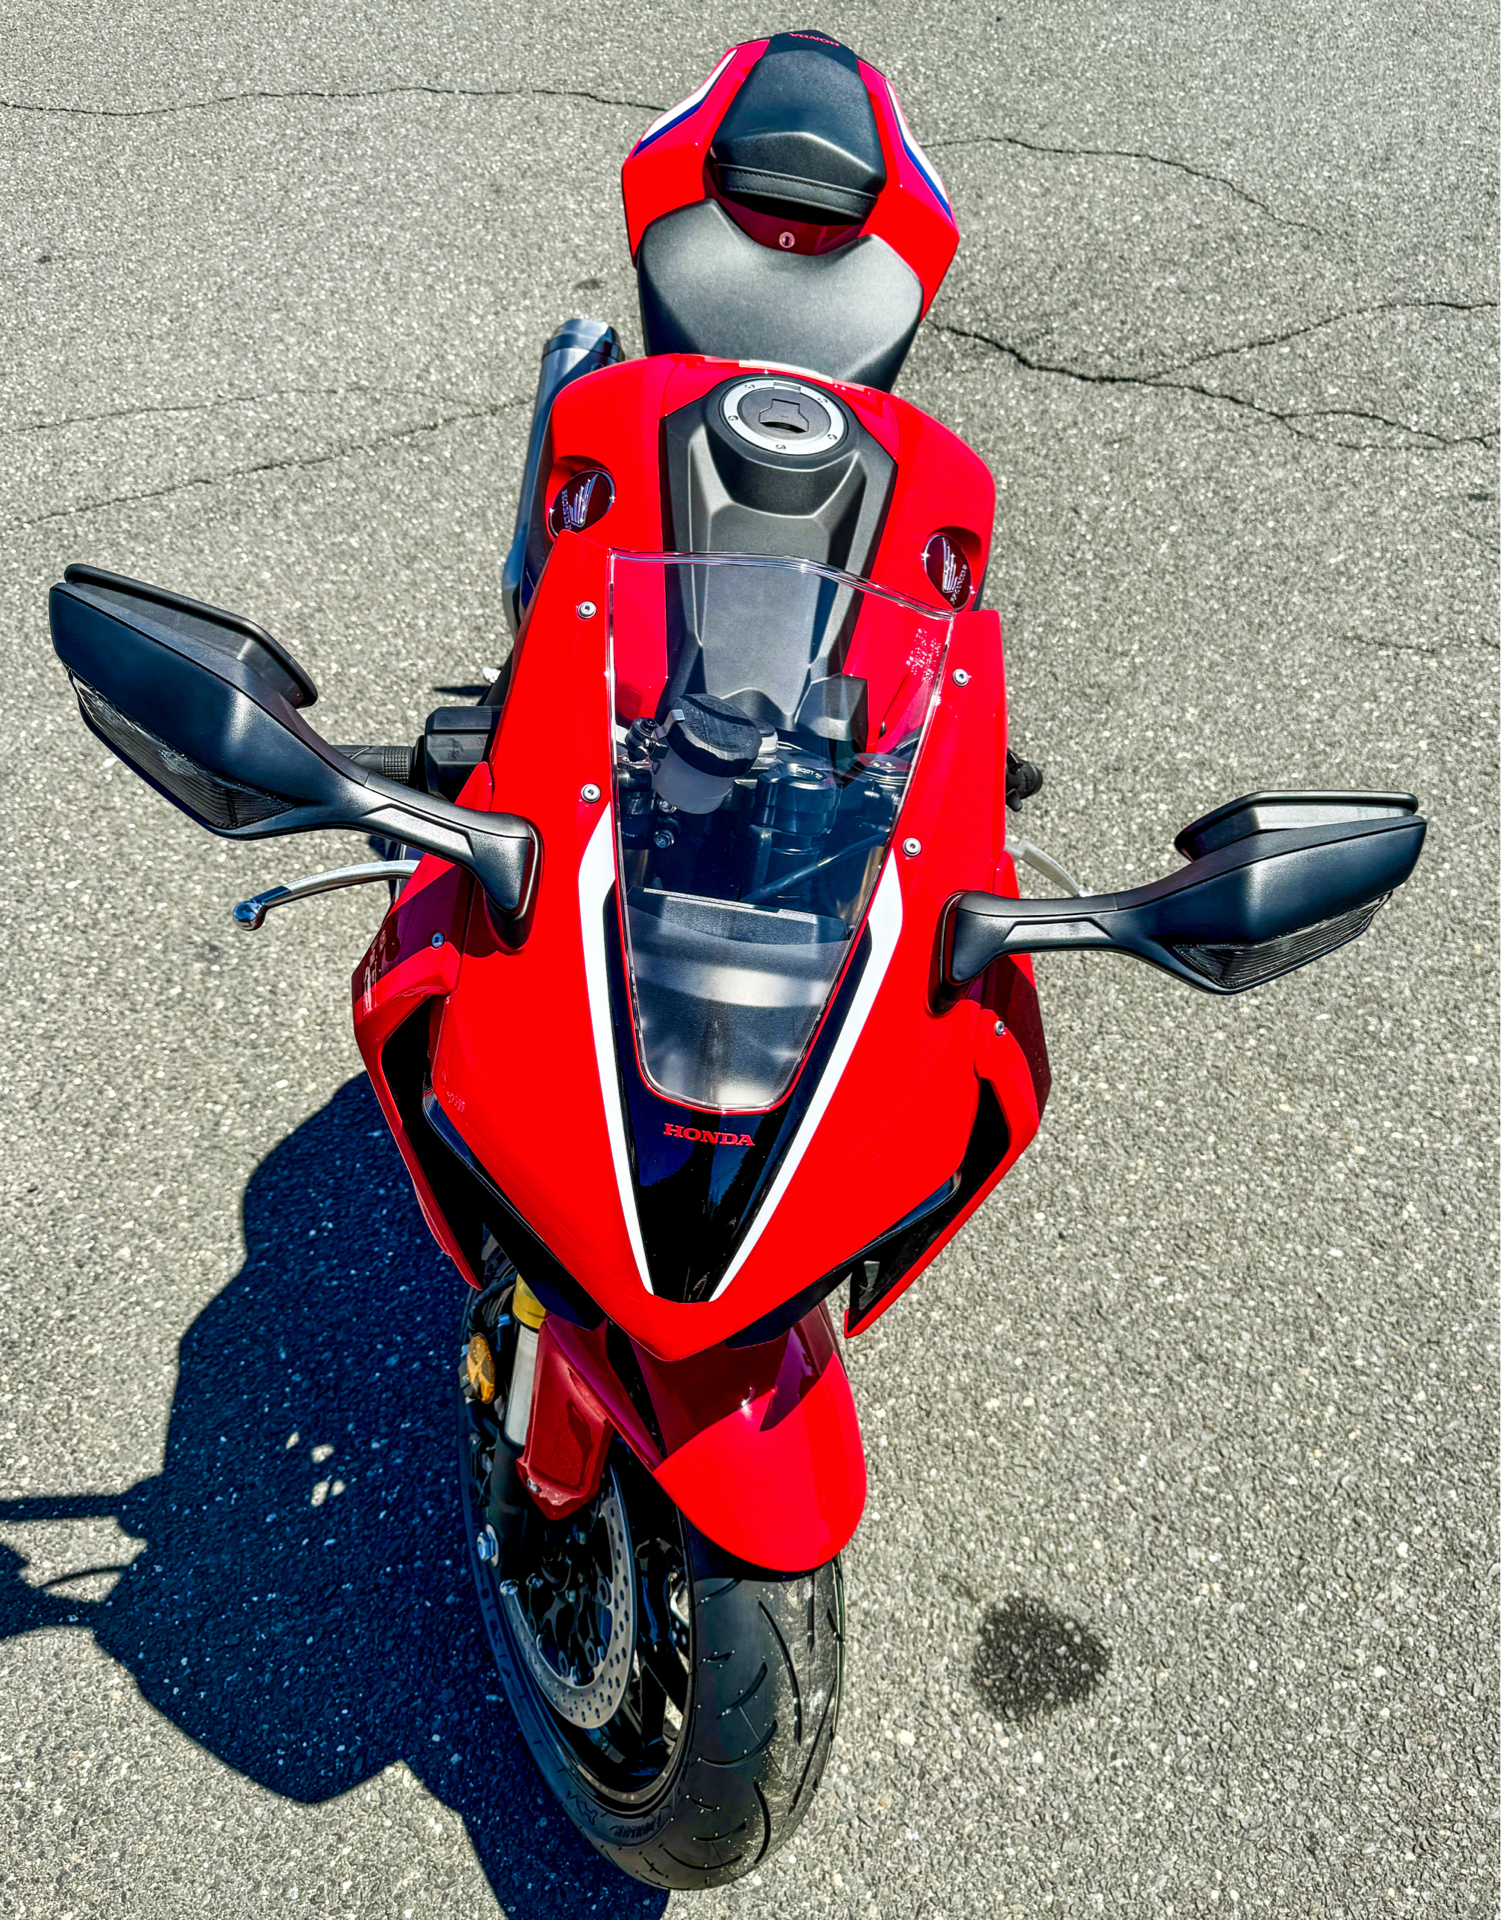 2023 Honda CBR1000RR in Northampton, Massachusetts - Photo 18